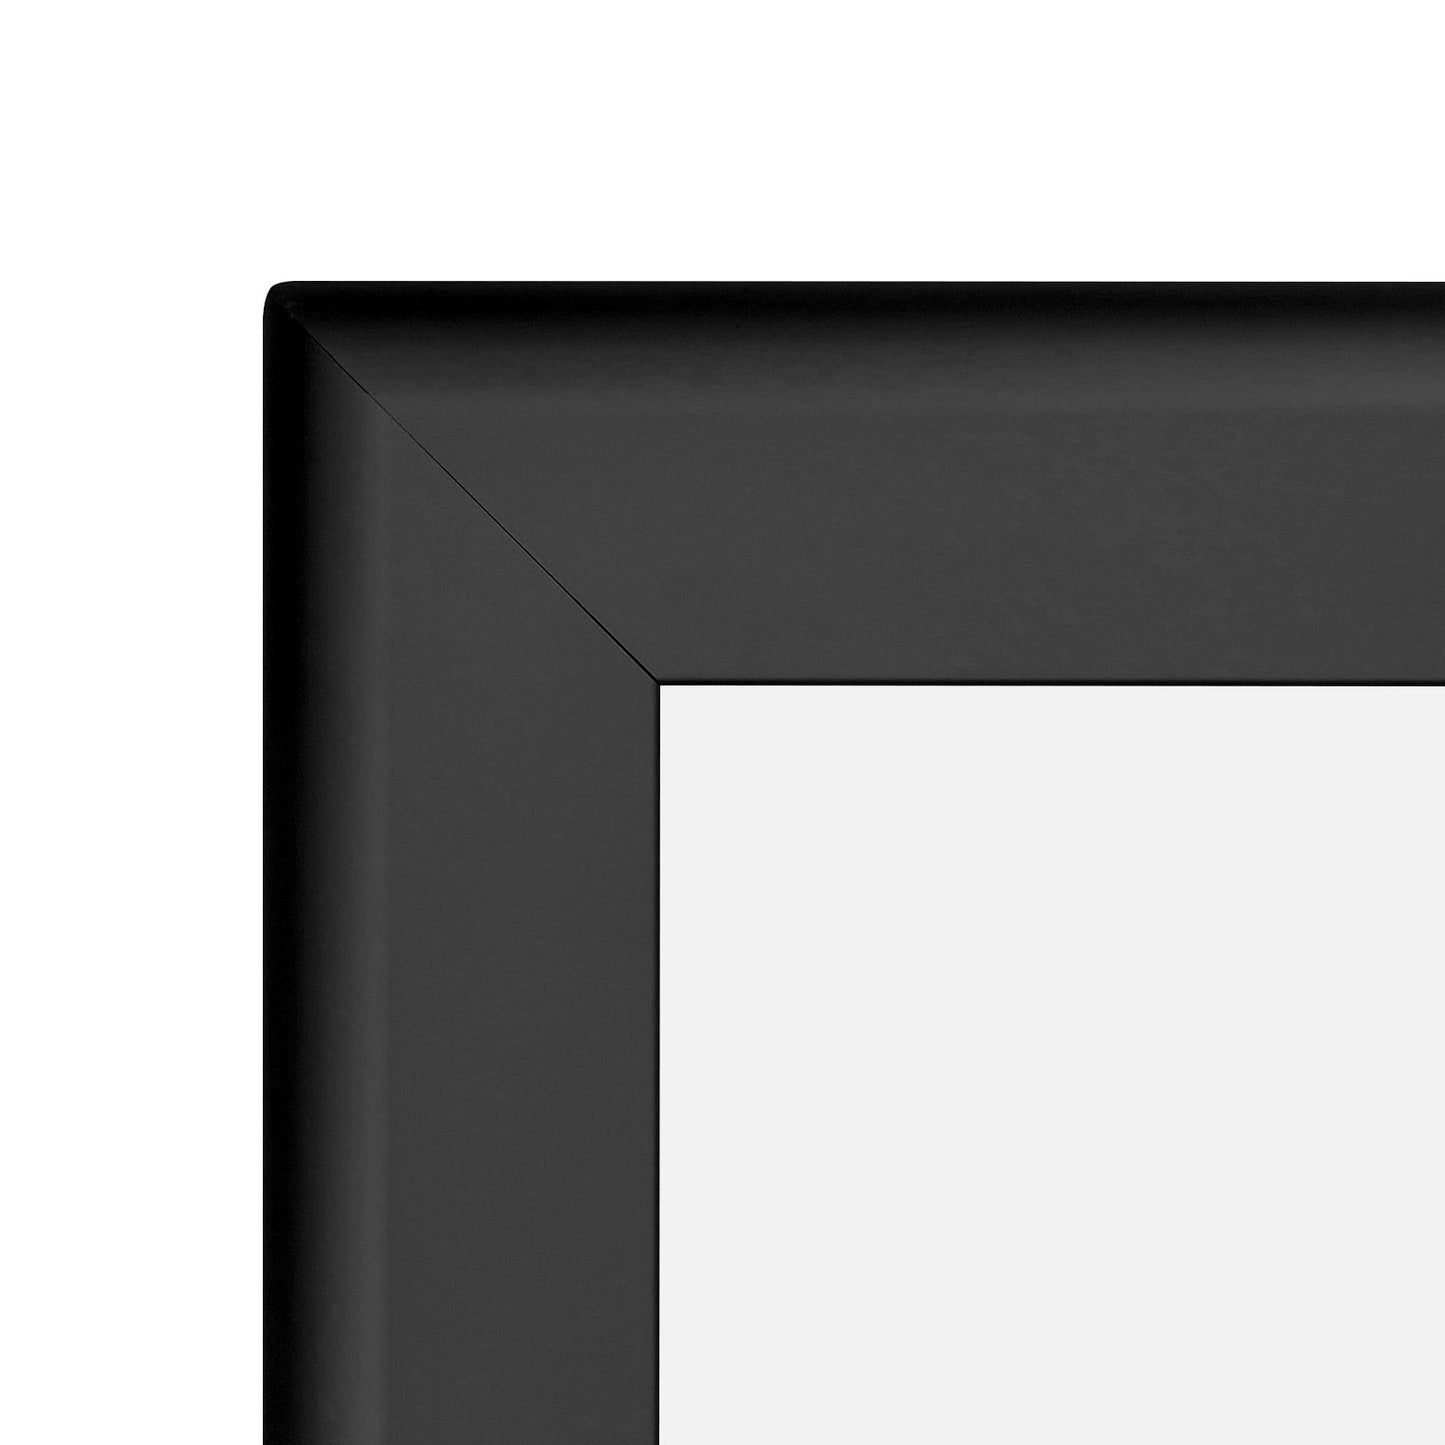 40x60 Black SnapeZo® Self-Assembly Snap Frame - 1.7" Profile - Snap Frames Direct